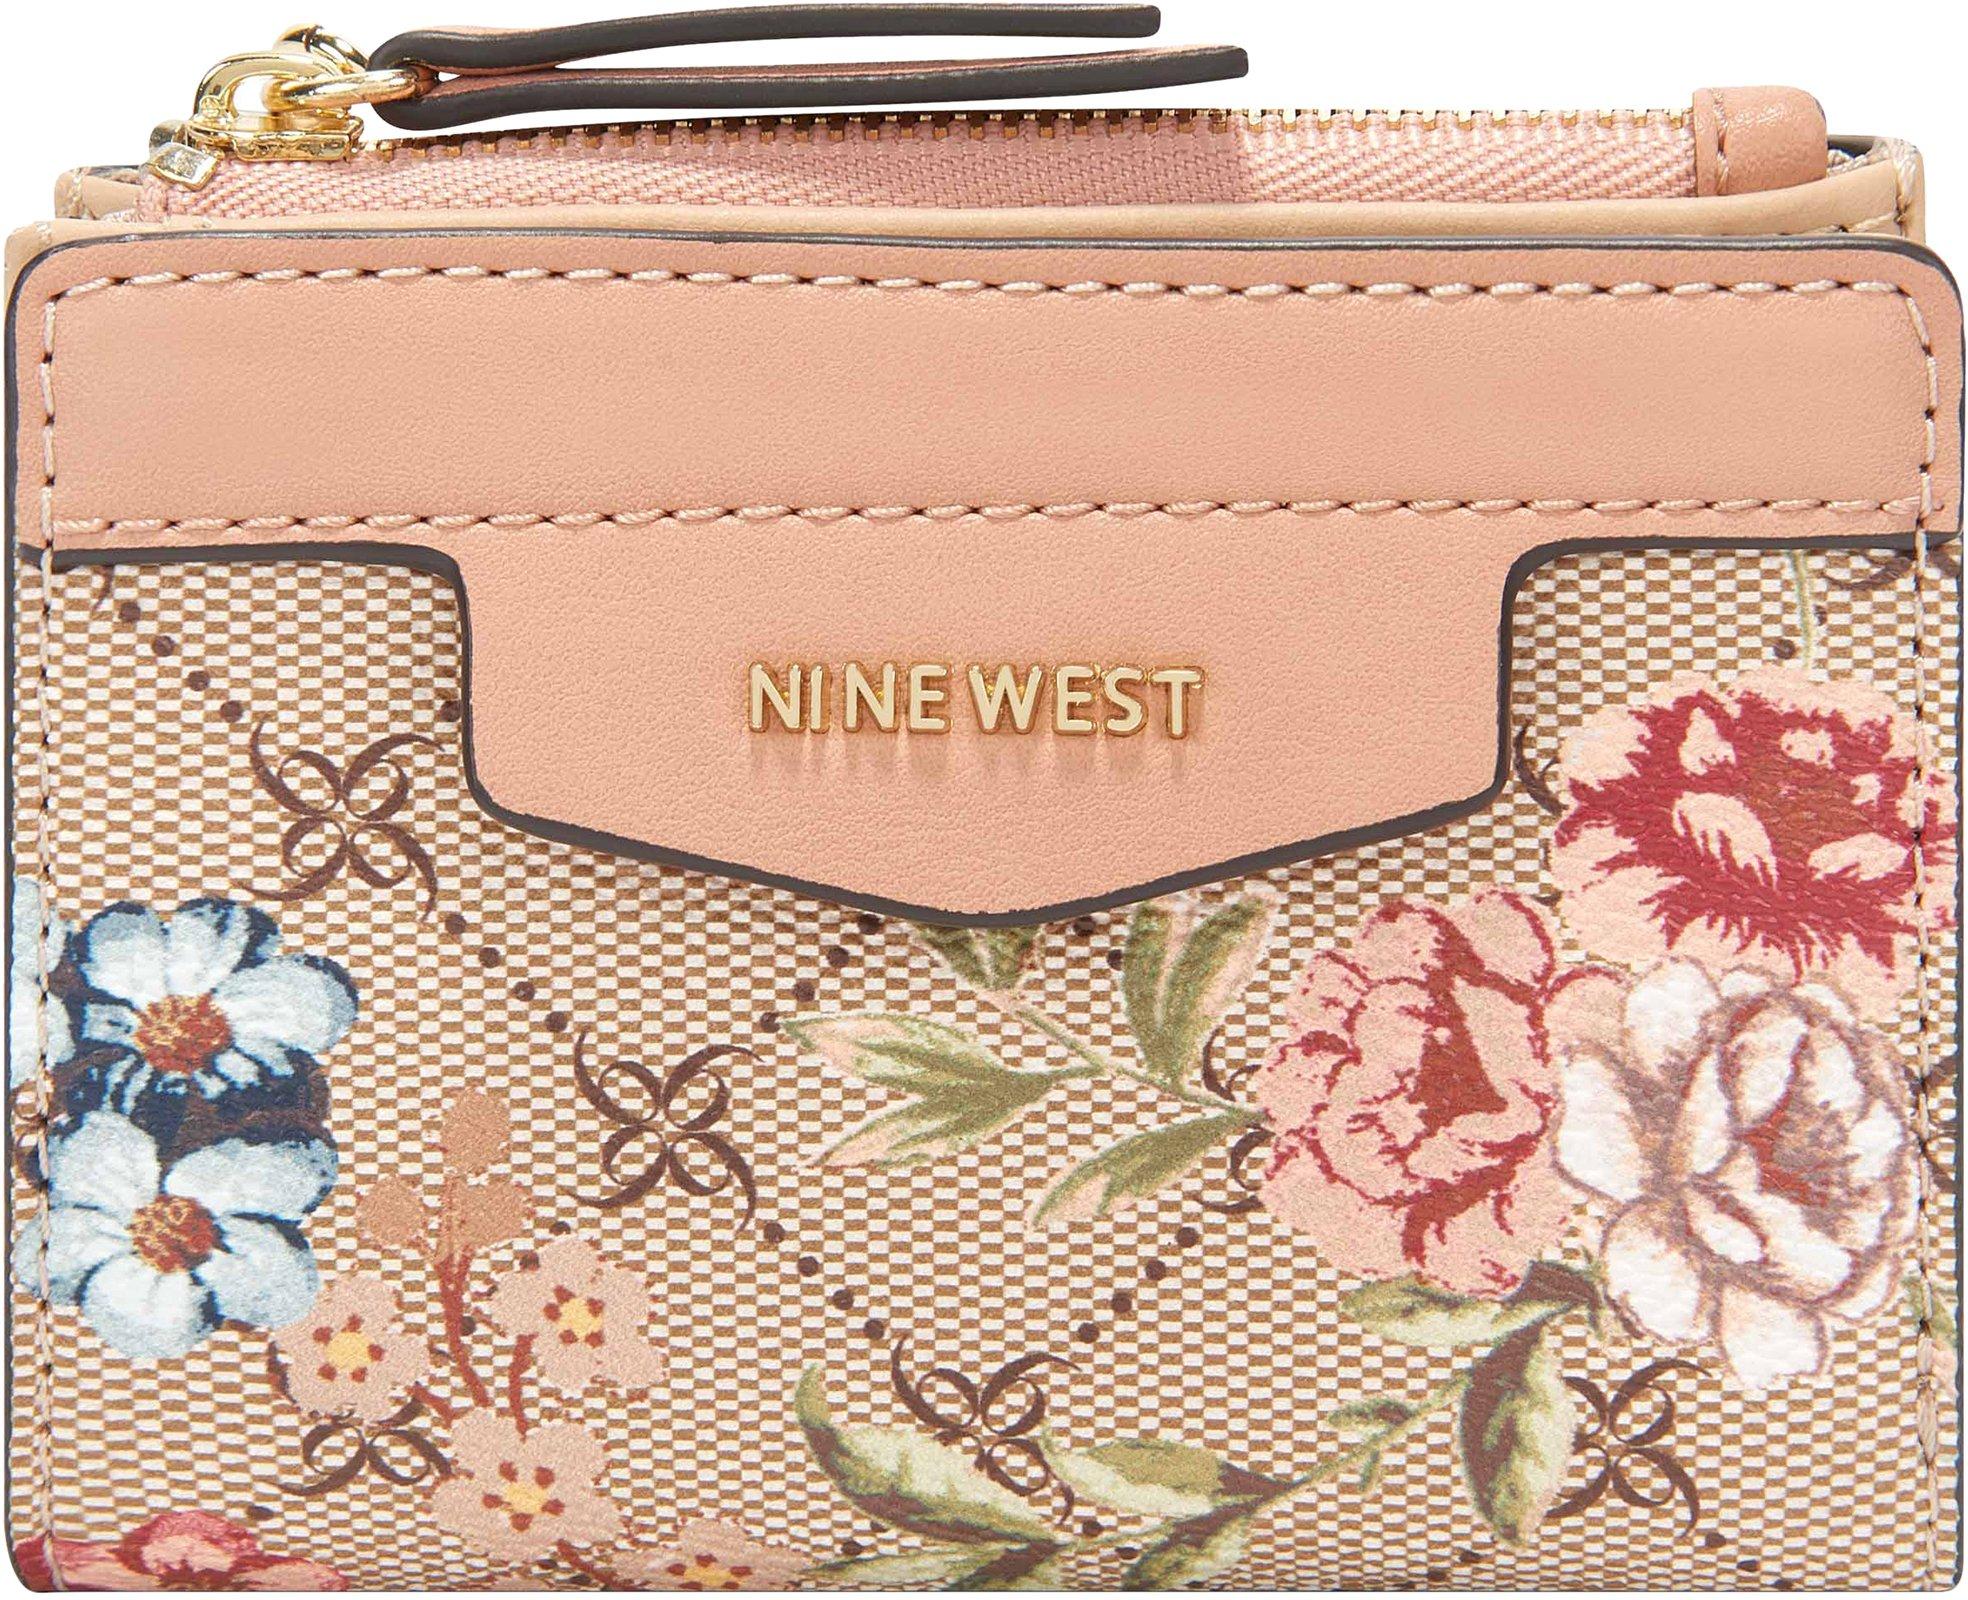 Coral Bay Tropical Floral Zipper Wristlet Wallet One Size Pink multi